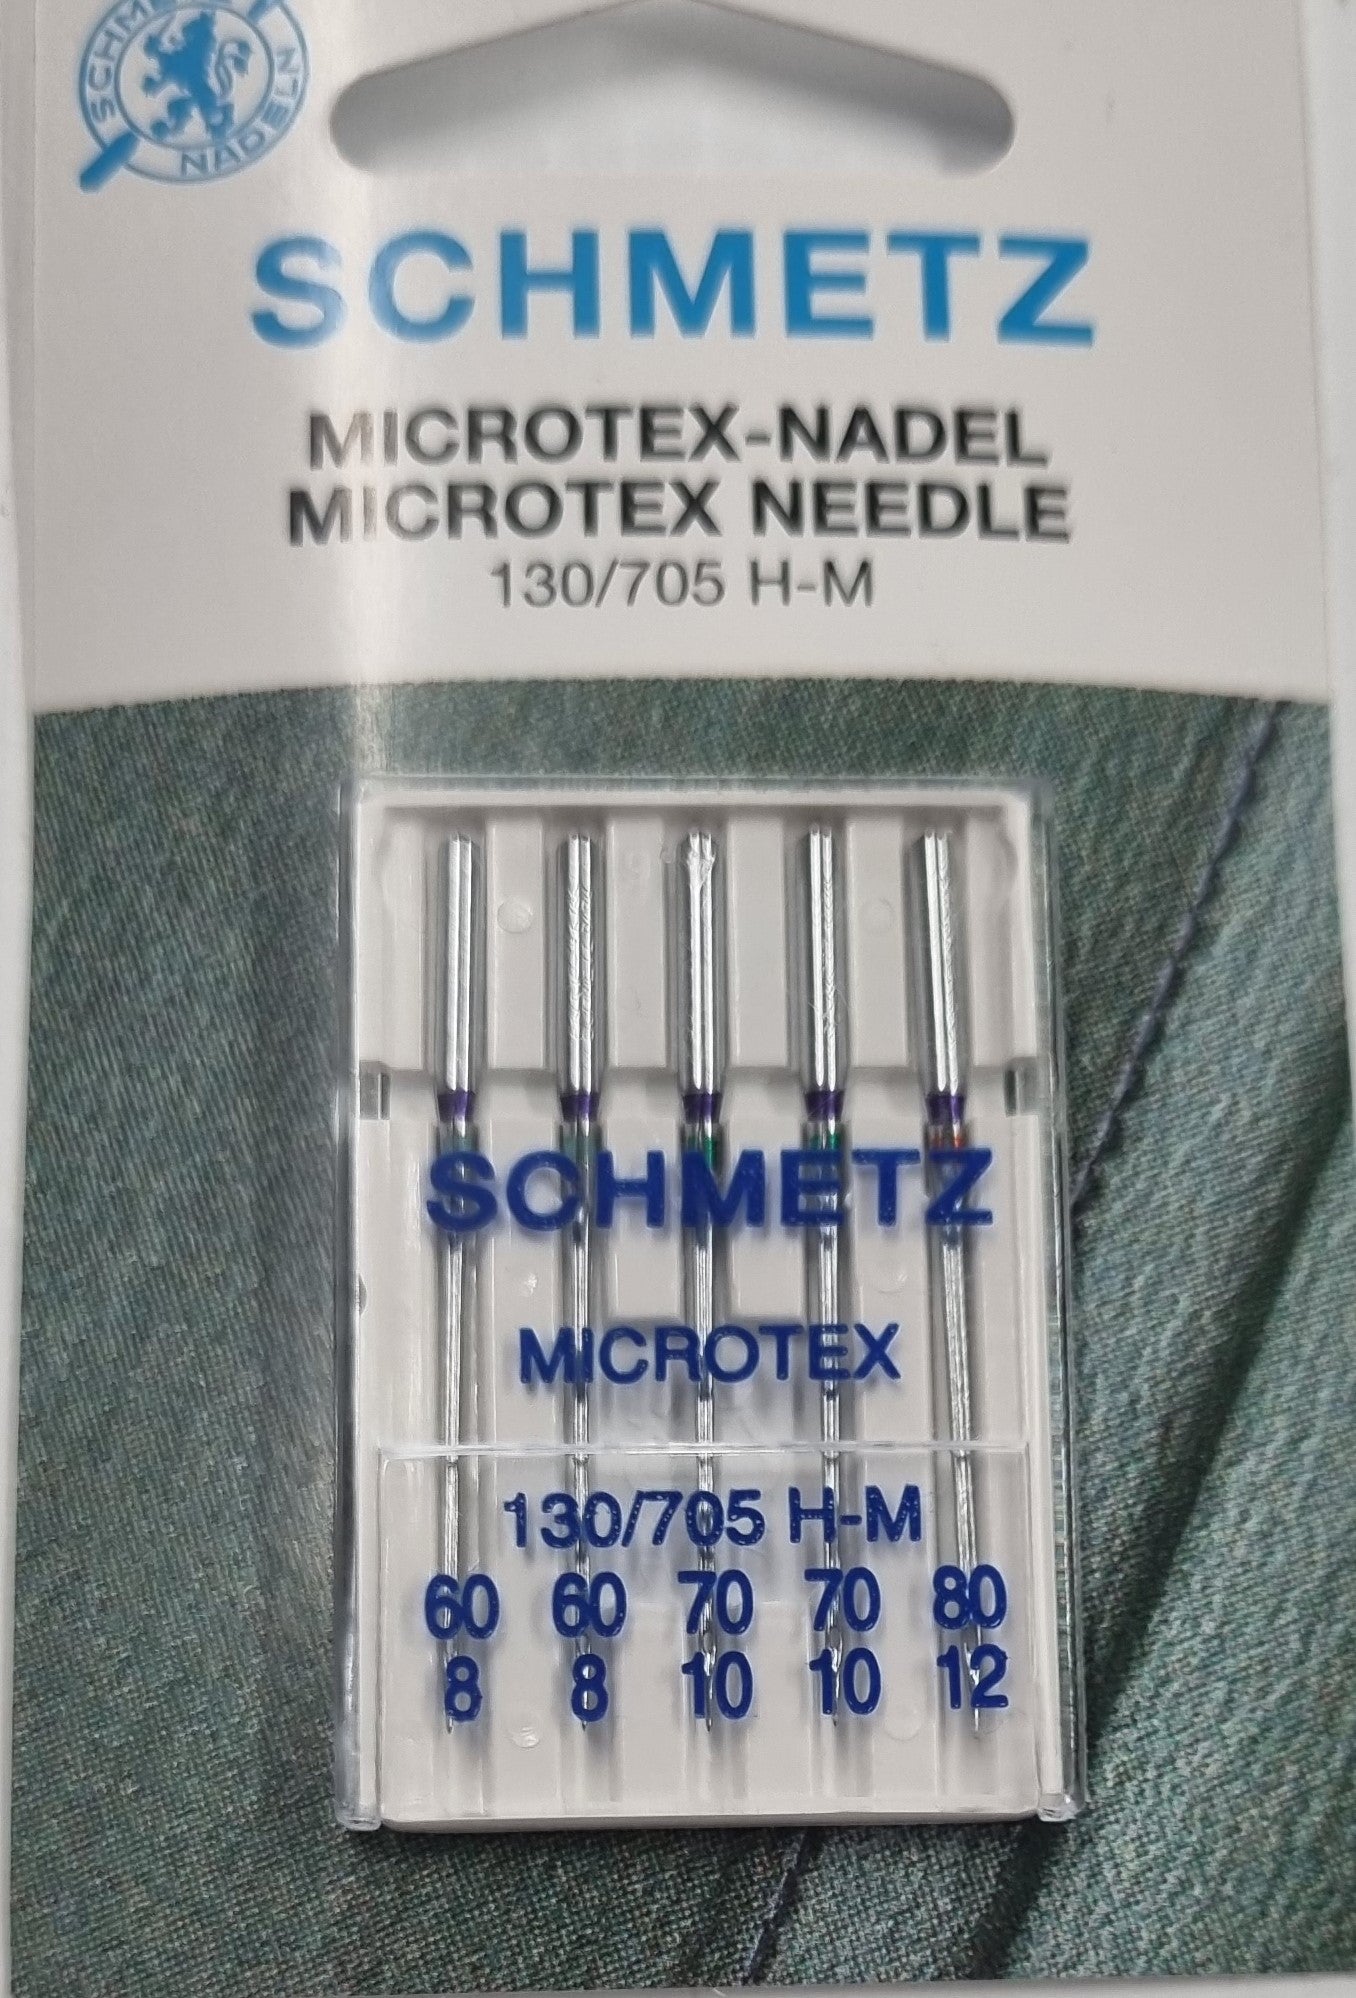 Sharp/Microtex sewing machine needles -Schmetz Asst